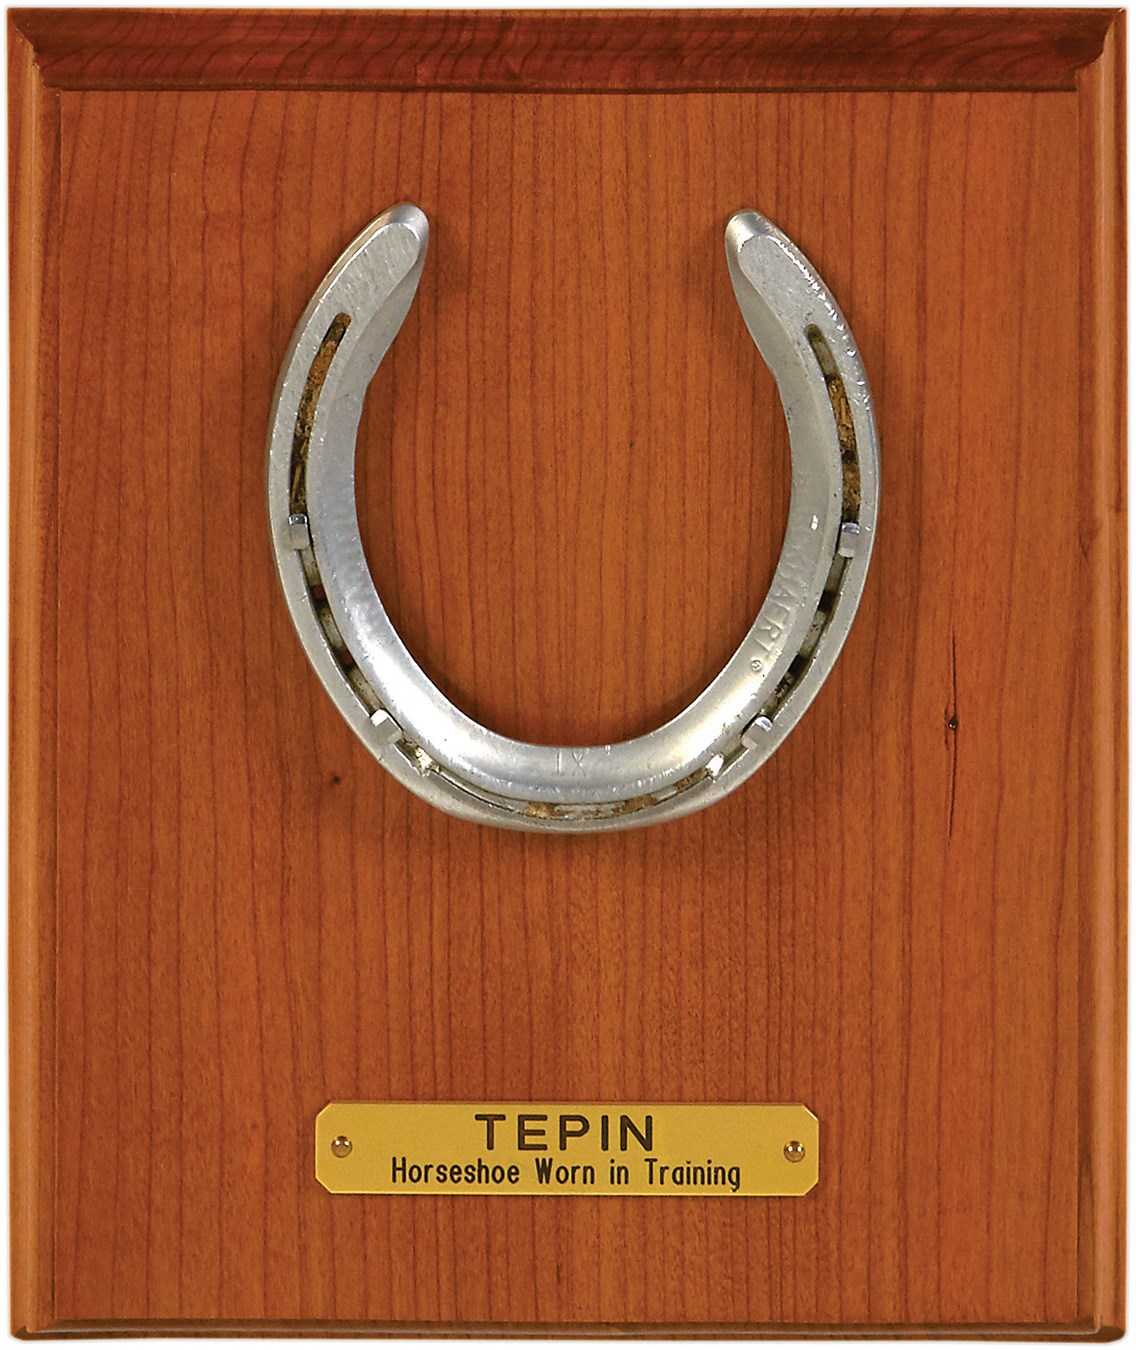 - "Tepin" Horseshoe Worn During Training